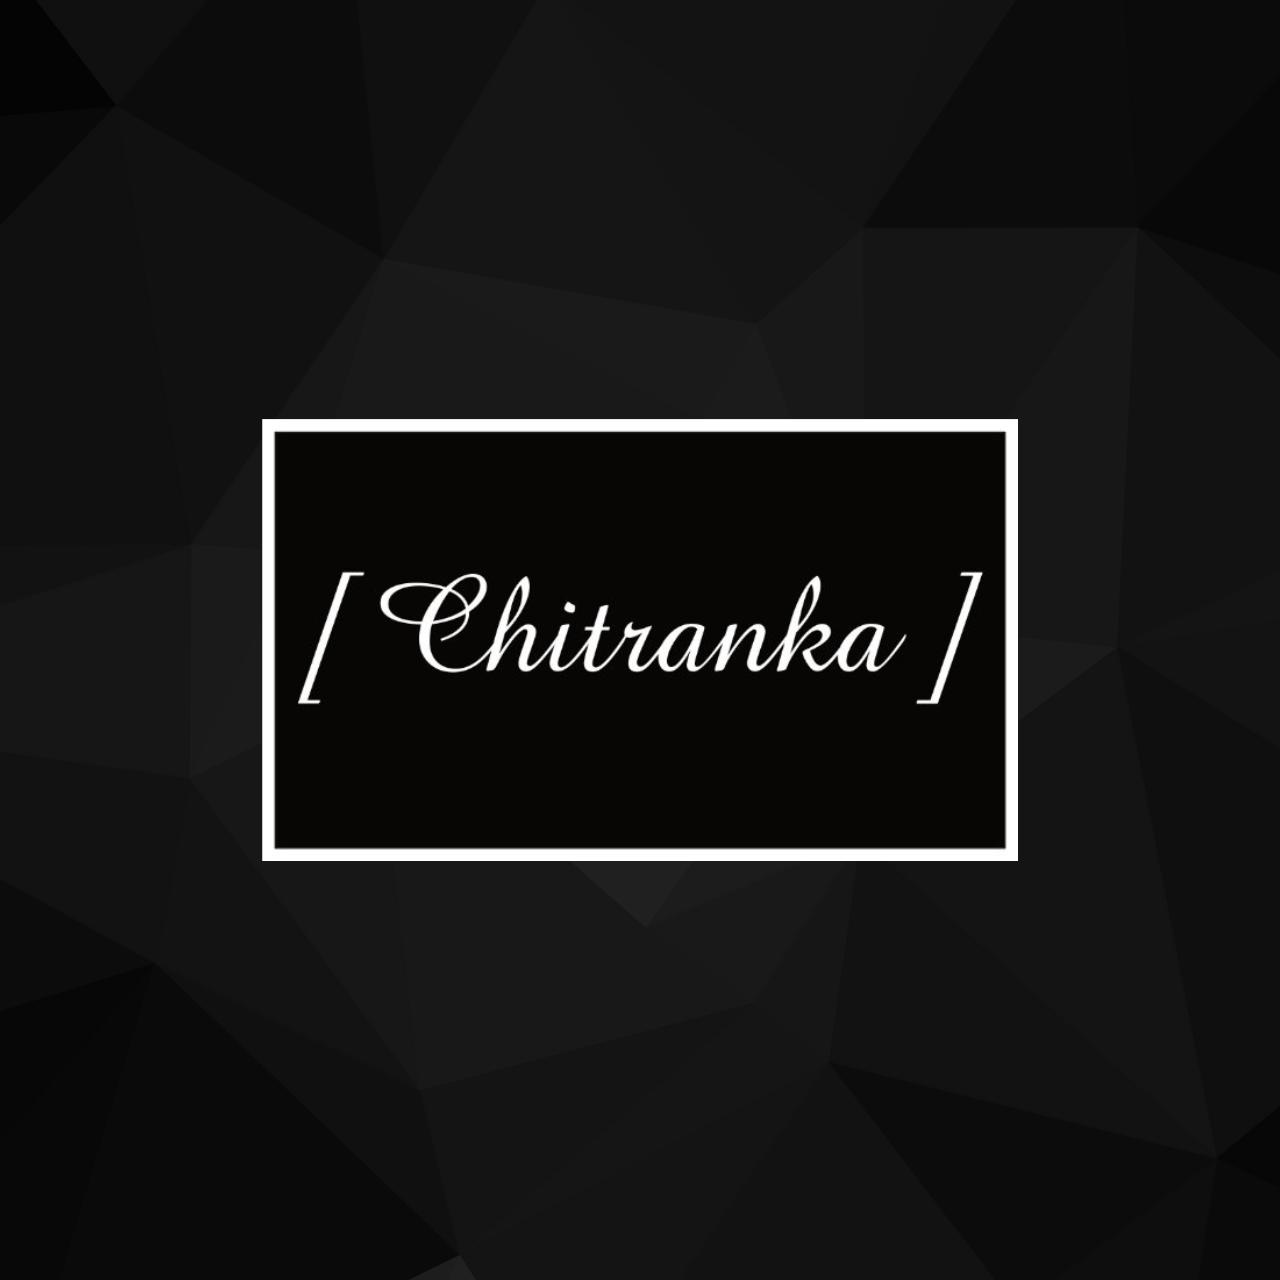 Chitranka Chowdhury